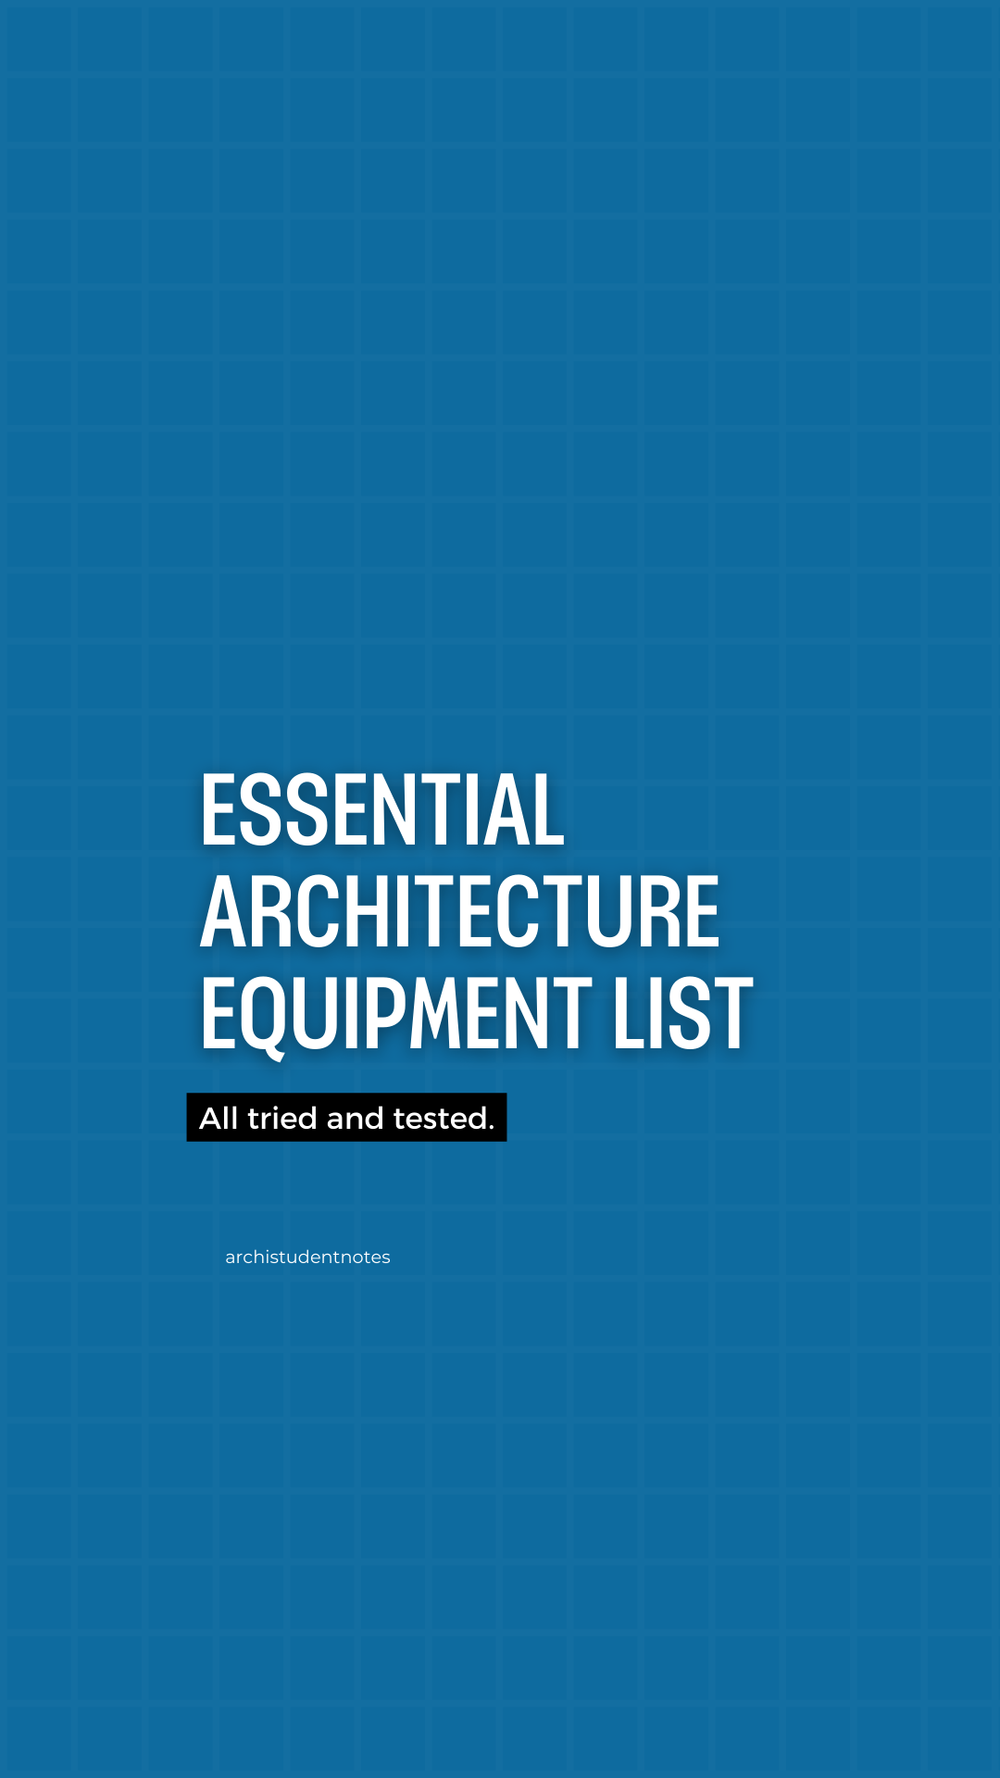 Essential Architecture Supplies for Design Professionals